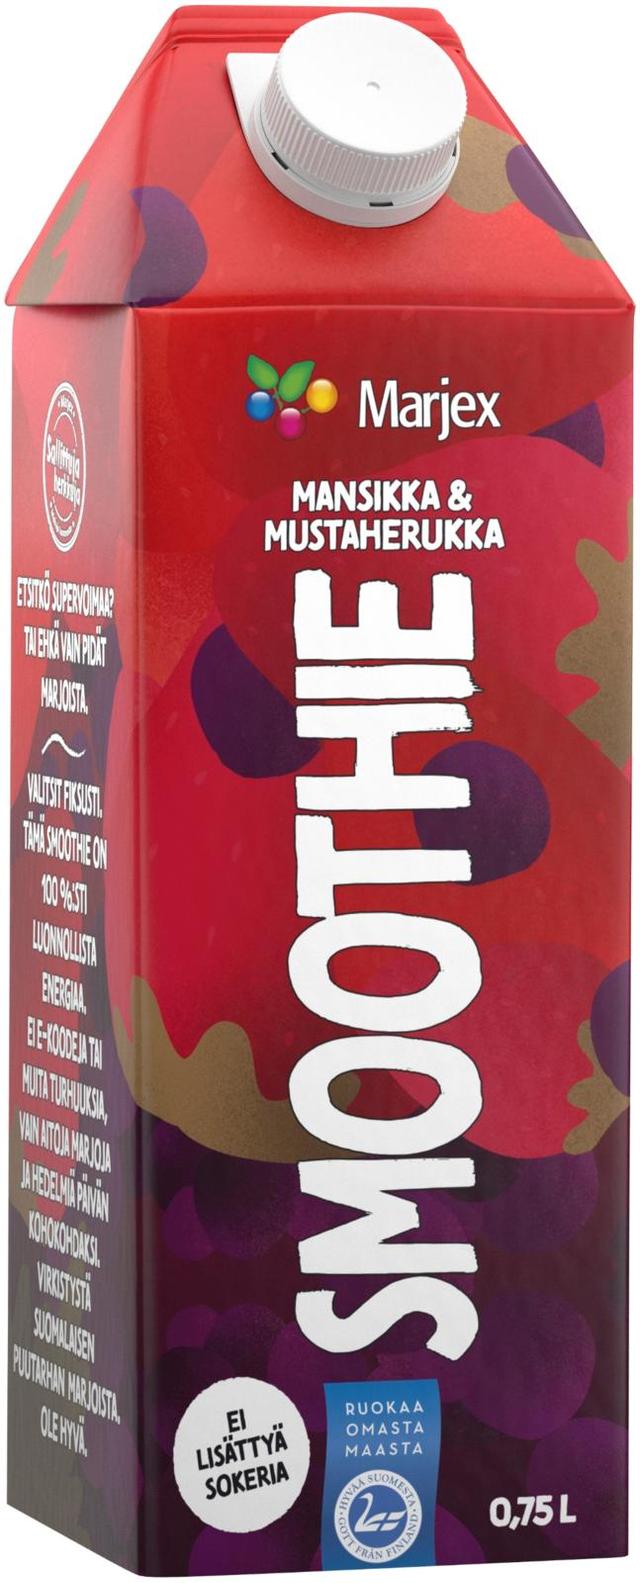 Marjex mansikka-mustaherukka smoothie 0,75l